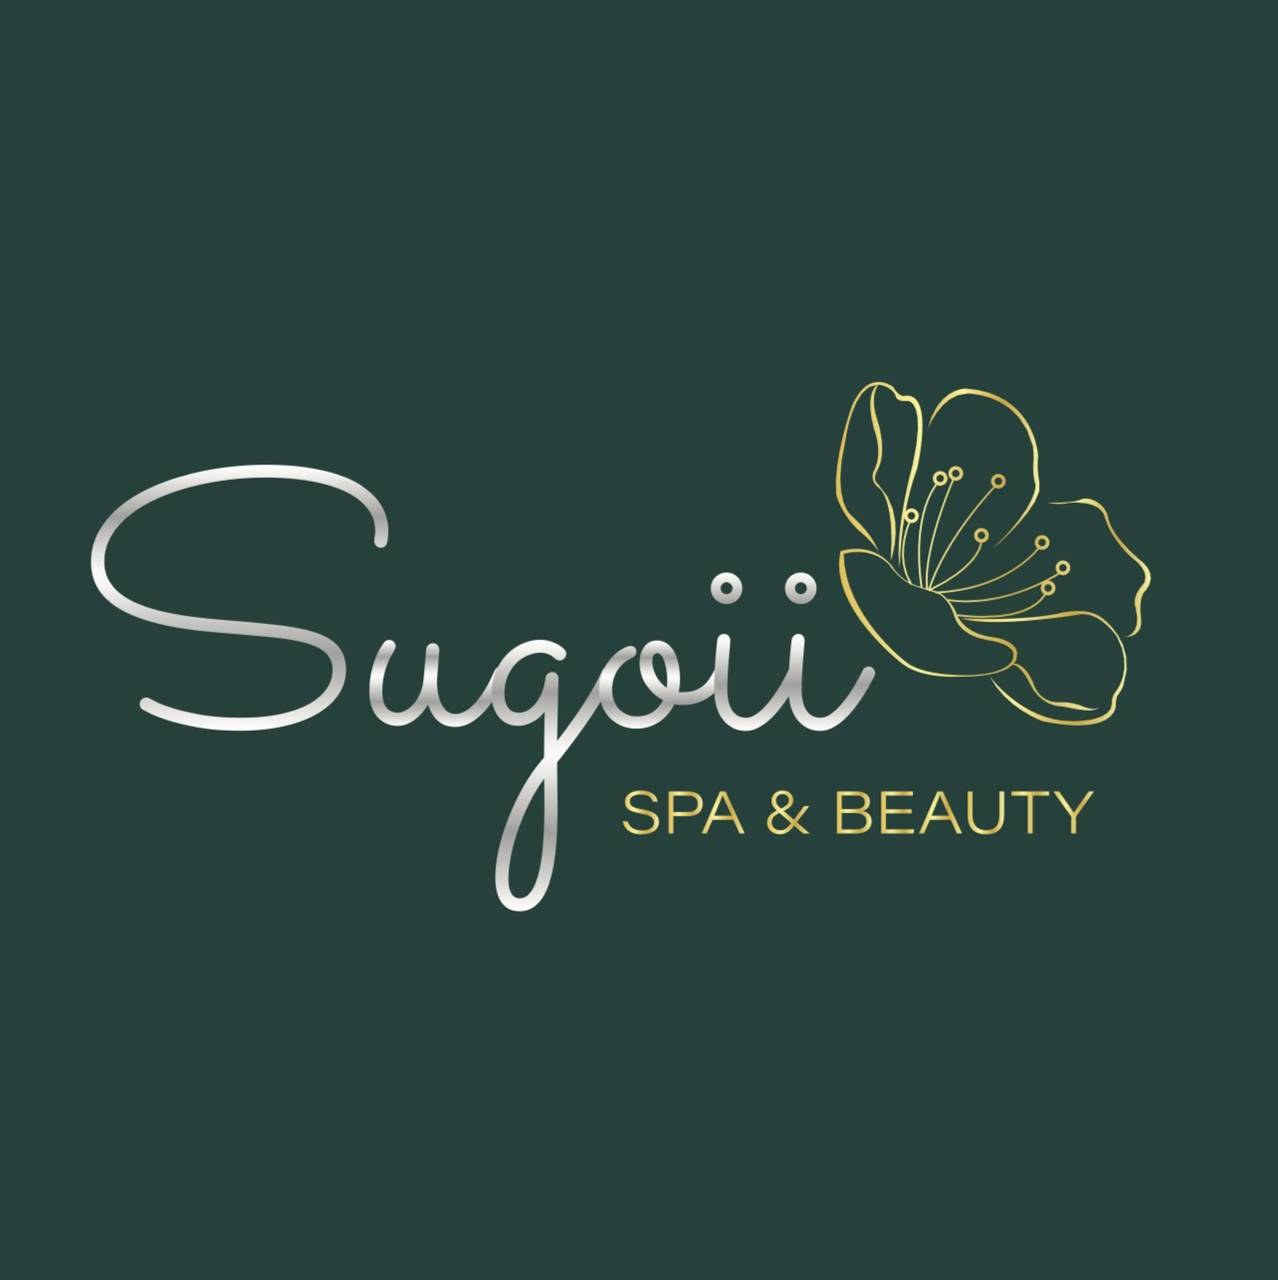 Sugoii Spa & Beauty